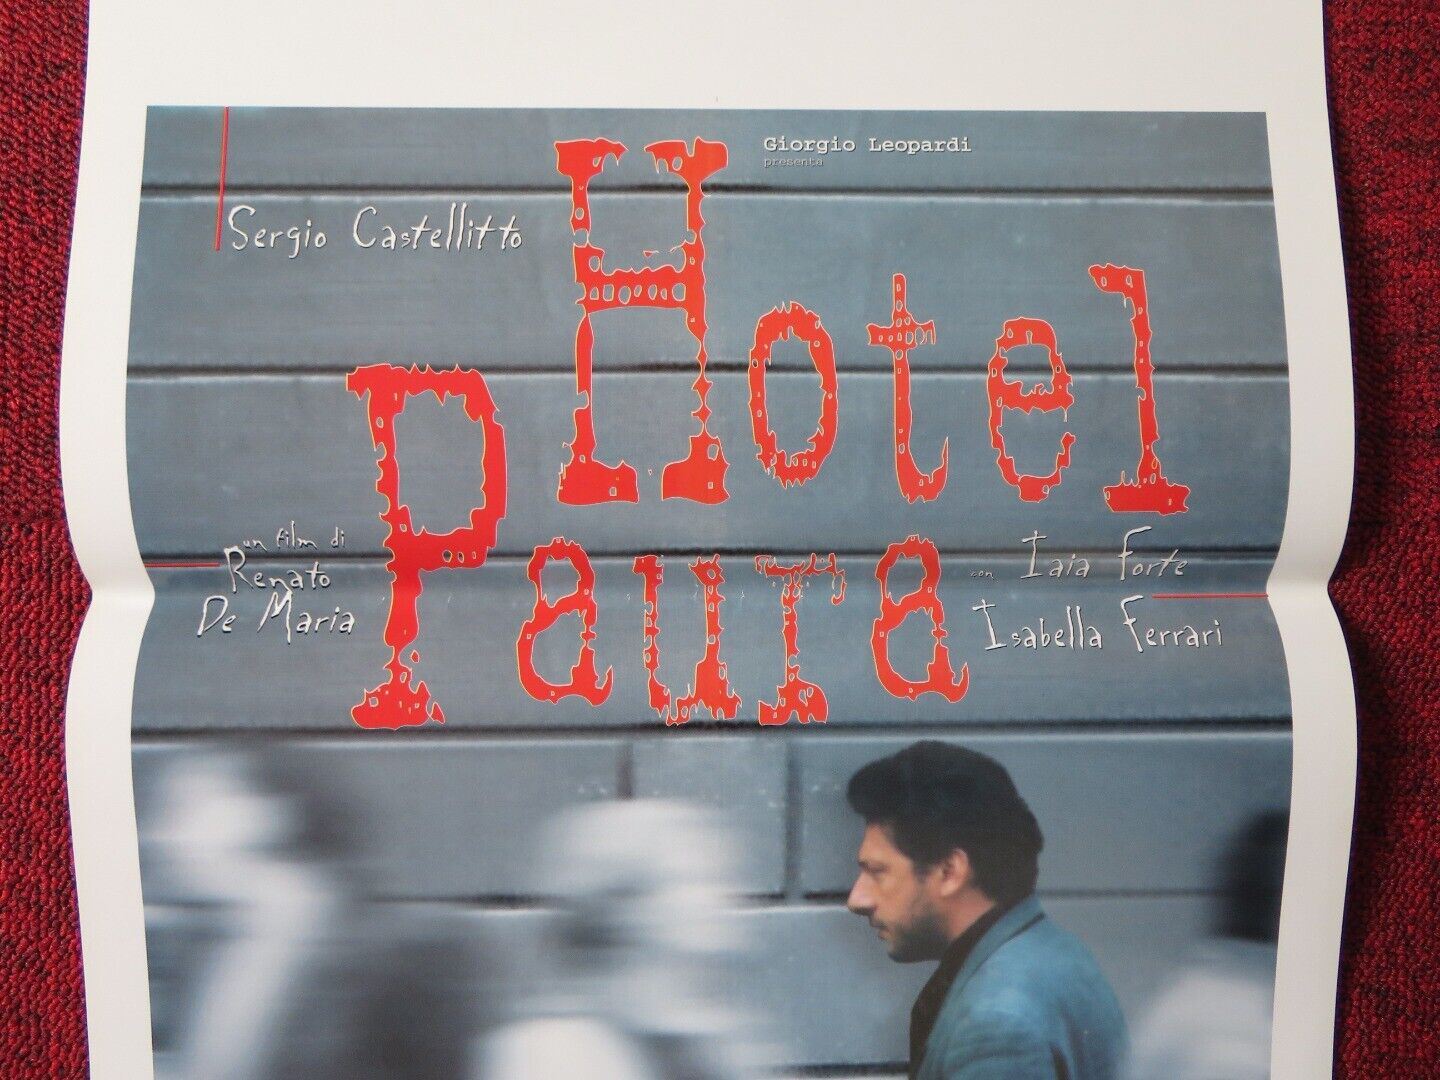 HOTEL PAURA  ITALIAN LOCANDINA (27.5"x13") POSTER ISABELLA FERRARI 1996